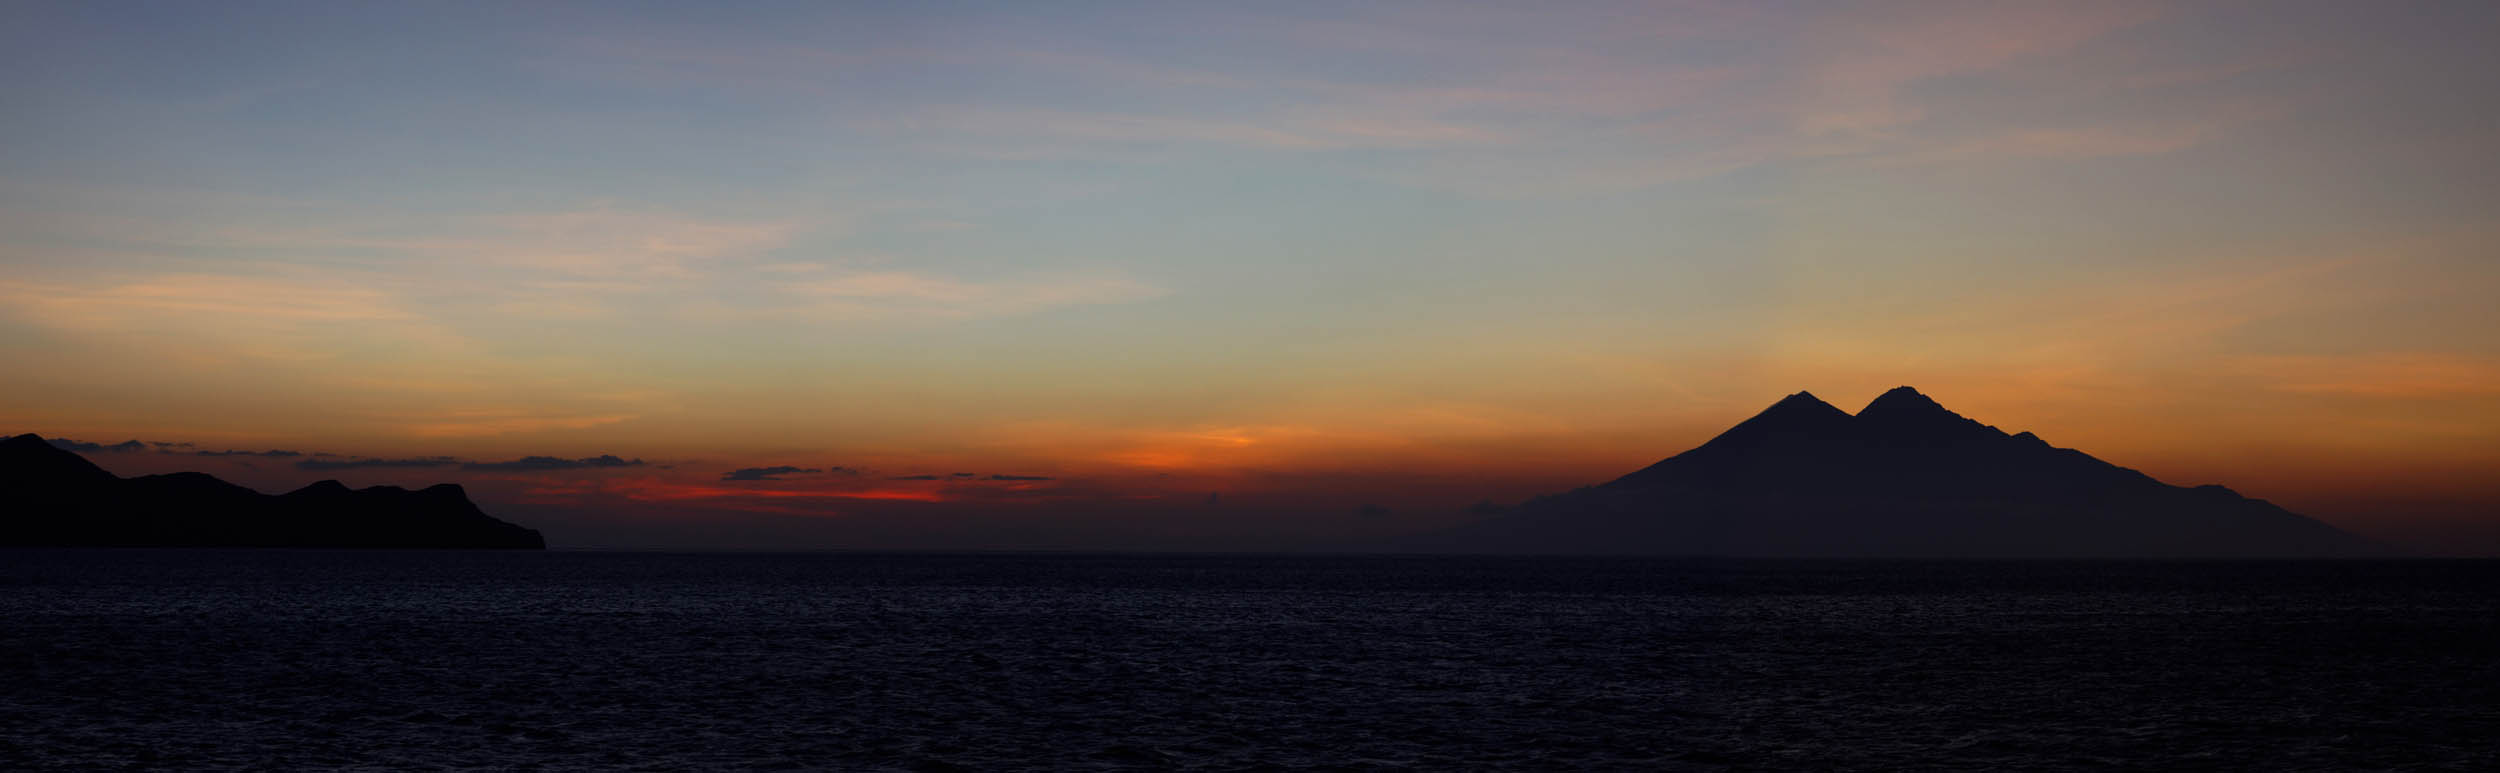 Sangeang sunset pano.jpg